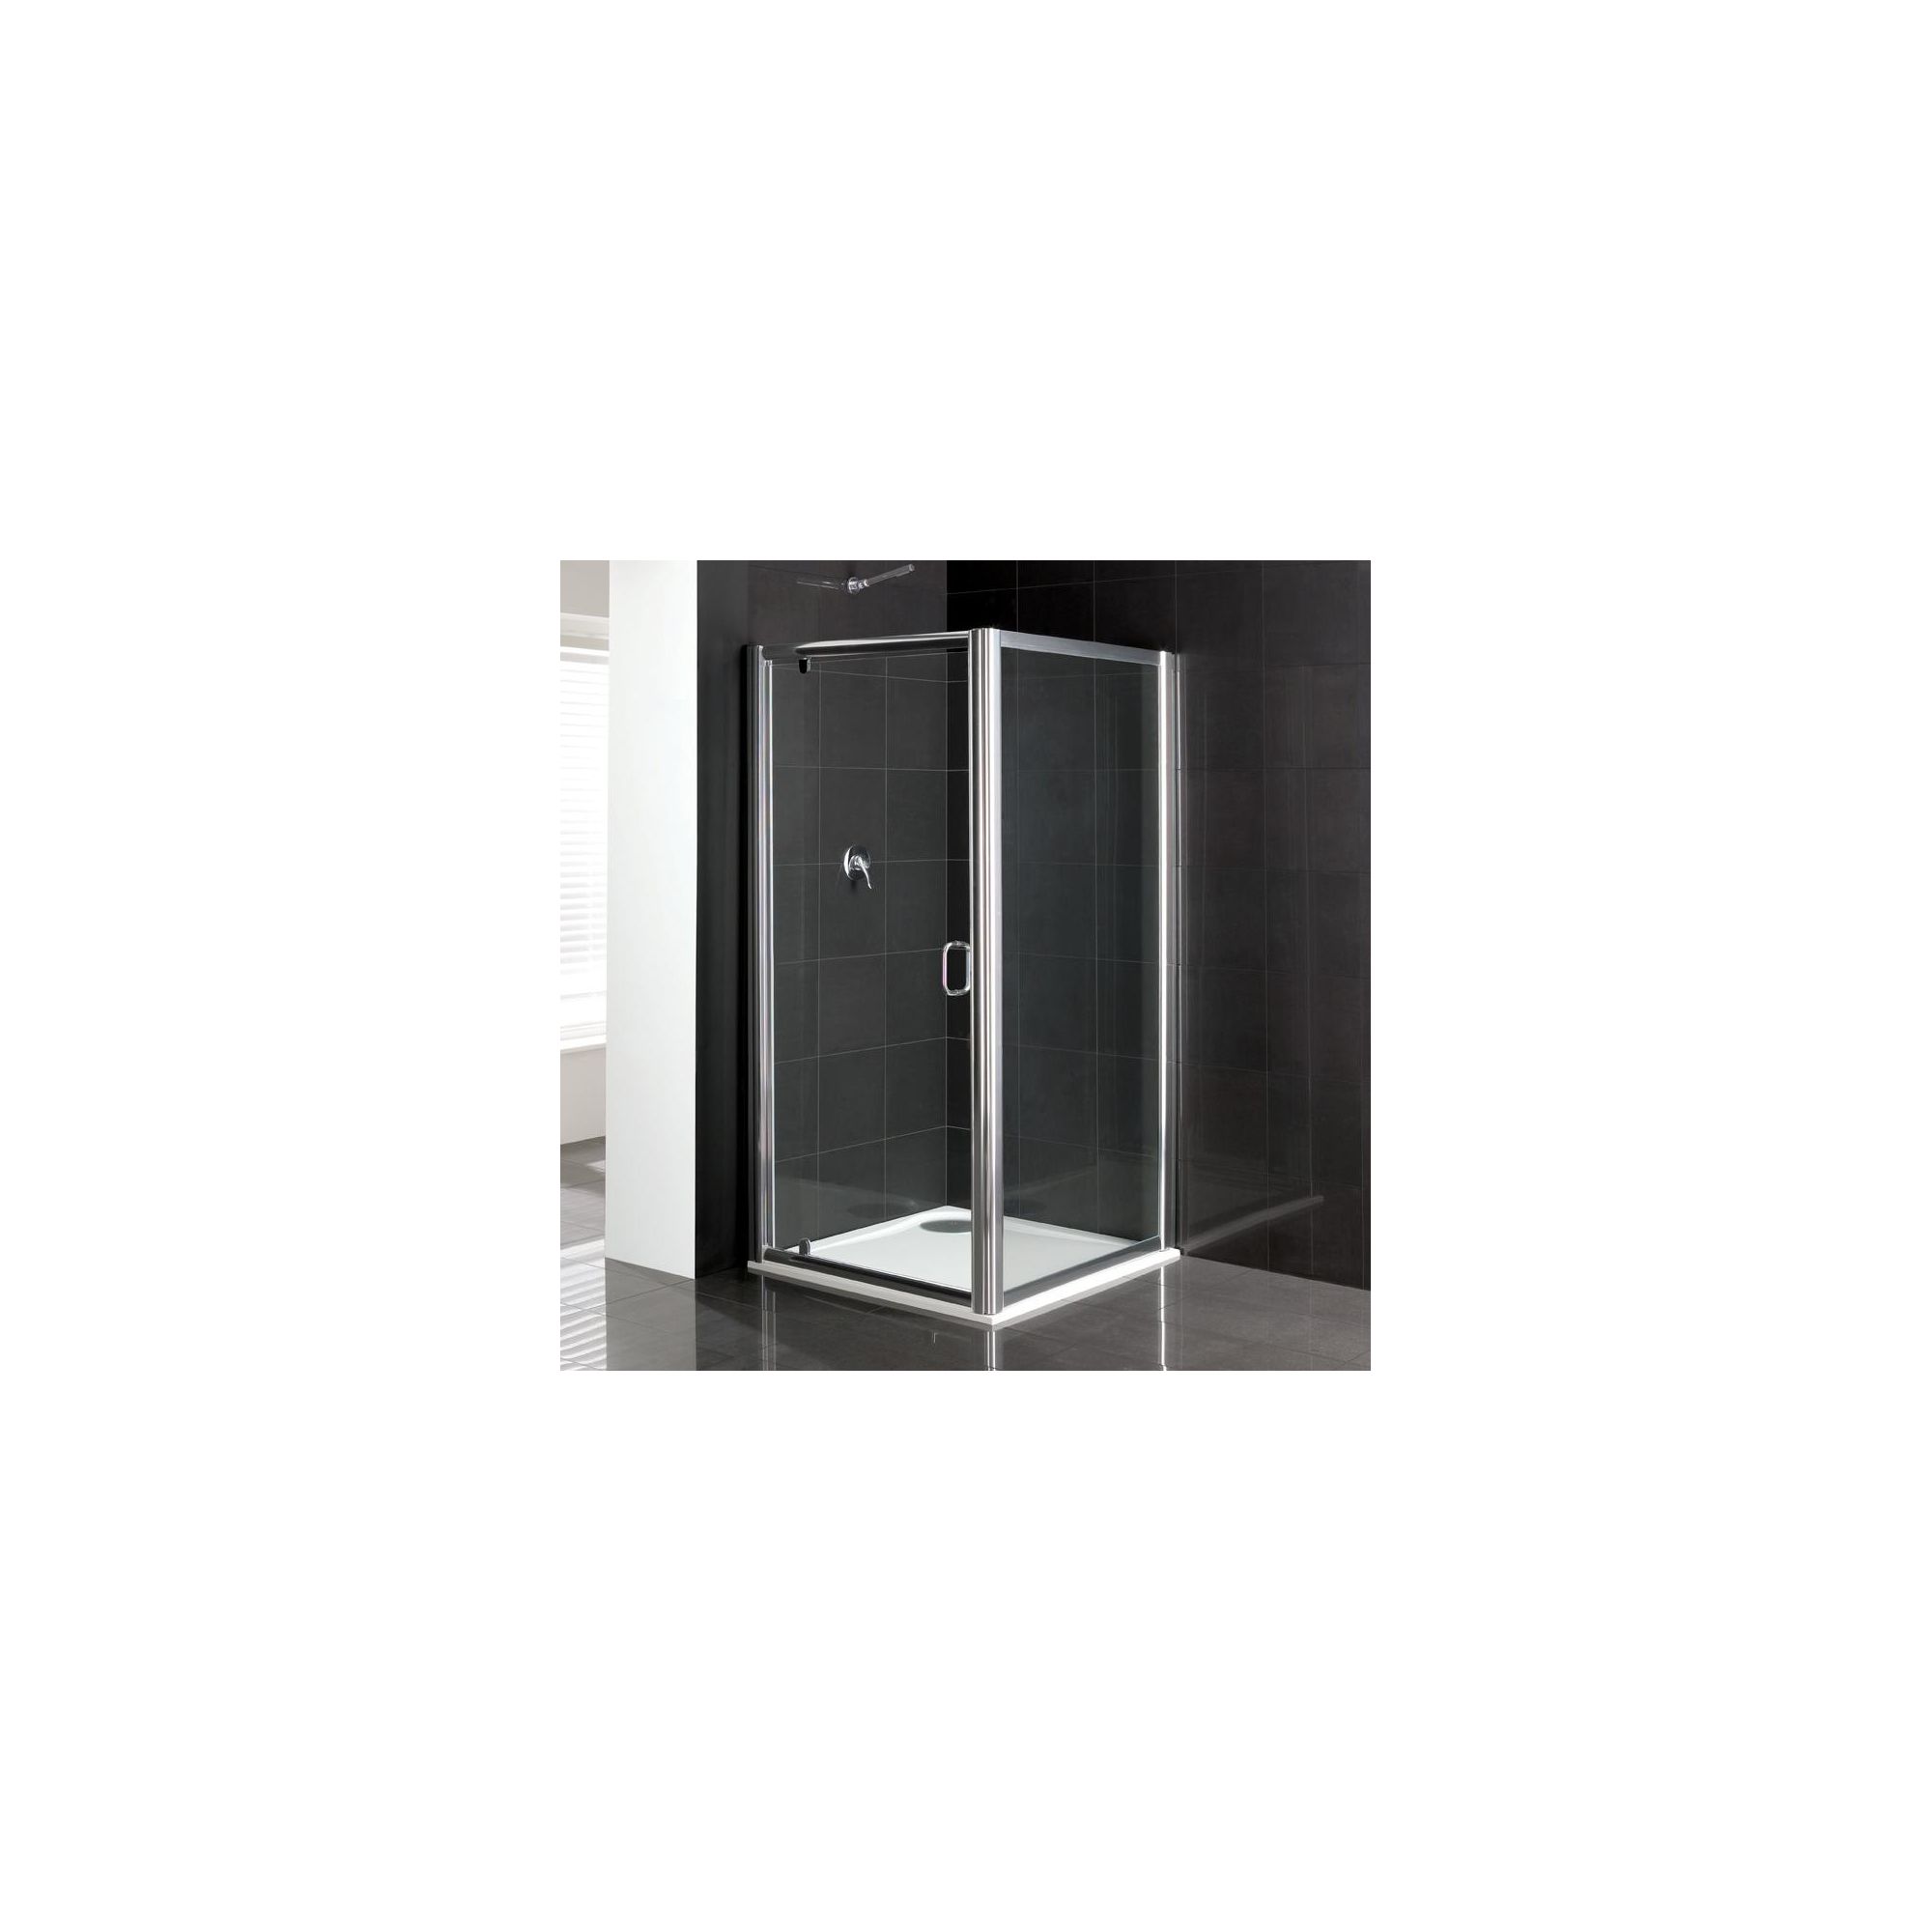 Duchy Elite Silver Pivot Door Shower Enclosure, 700mm x 700mm, Standard Tray, 6mm Glass at Tesco Direct